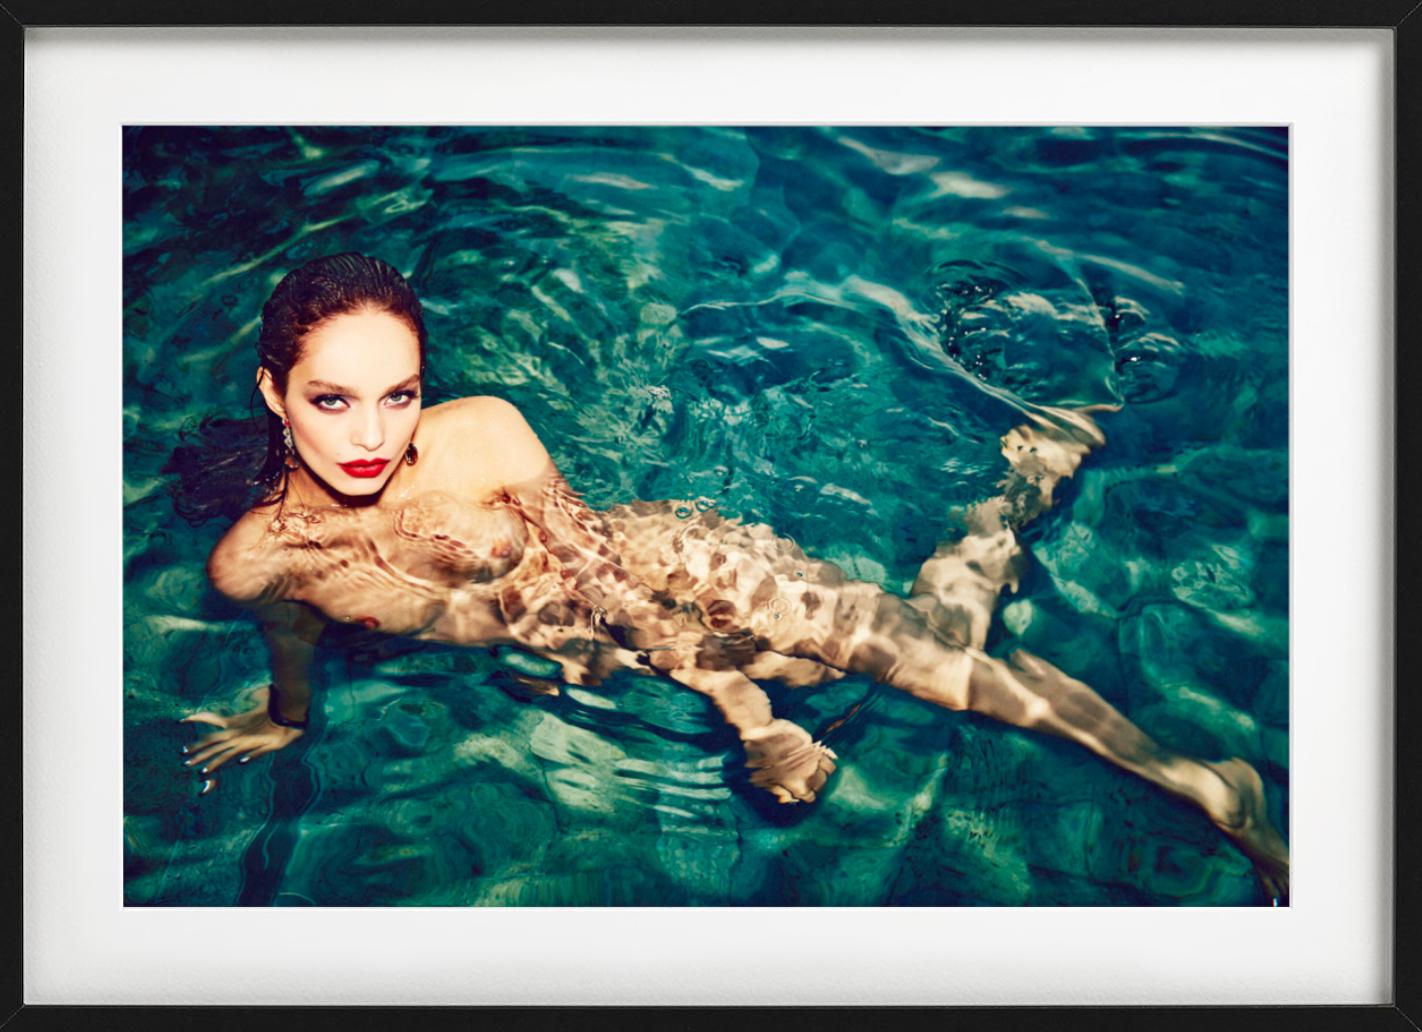 Luma Grothe for Vogue Brasil - nude model swimming underwater in blue sea - Photograph by Ellen von Unwerth